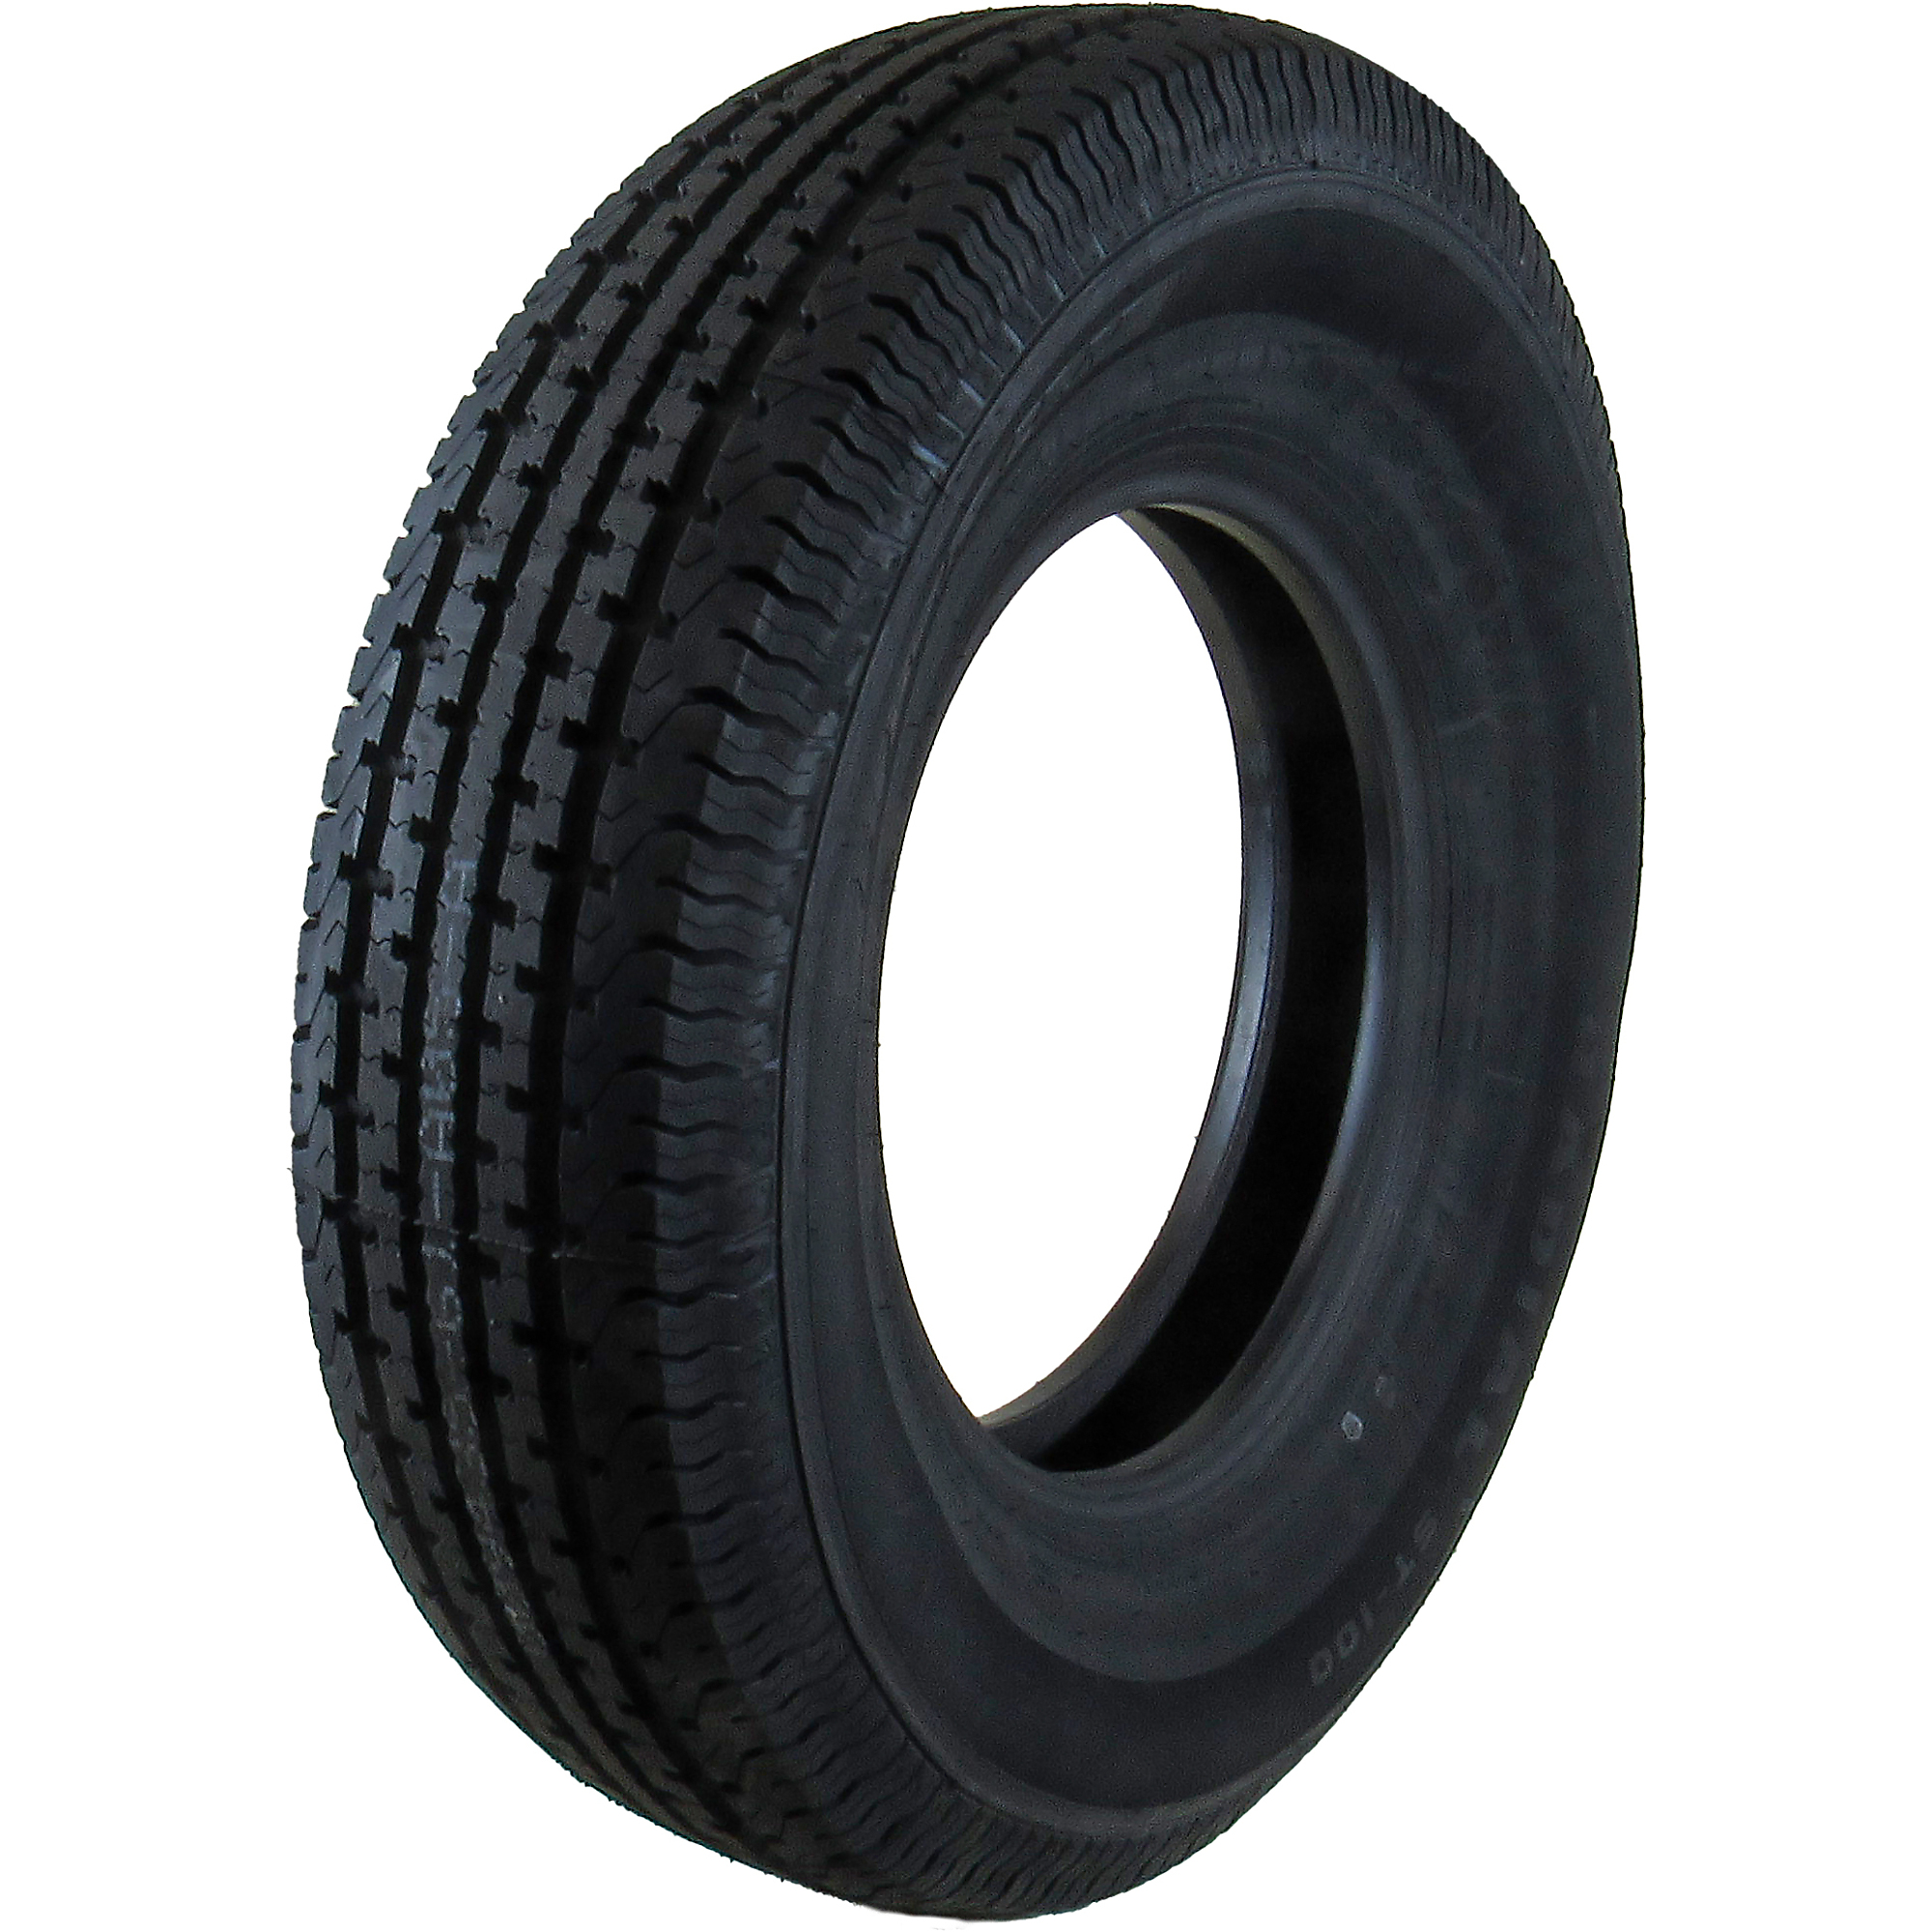 HI-RUN, Highway Trailer Tire, Radial-ply, Tire Size ST205/75R14 Load Range Rating D, Model HZT1004